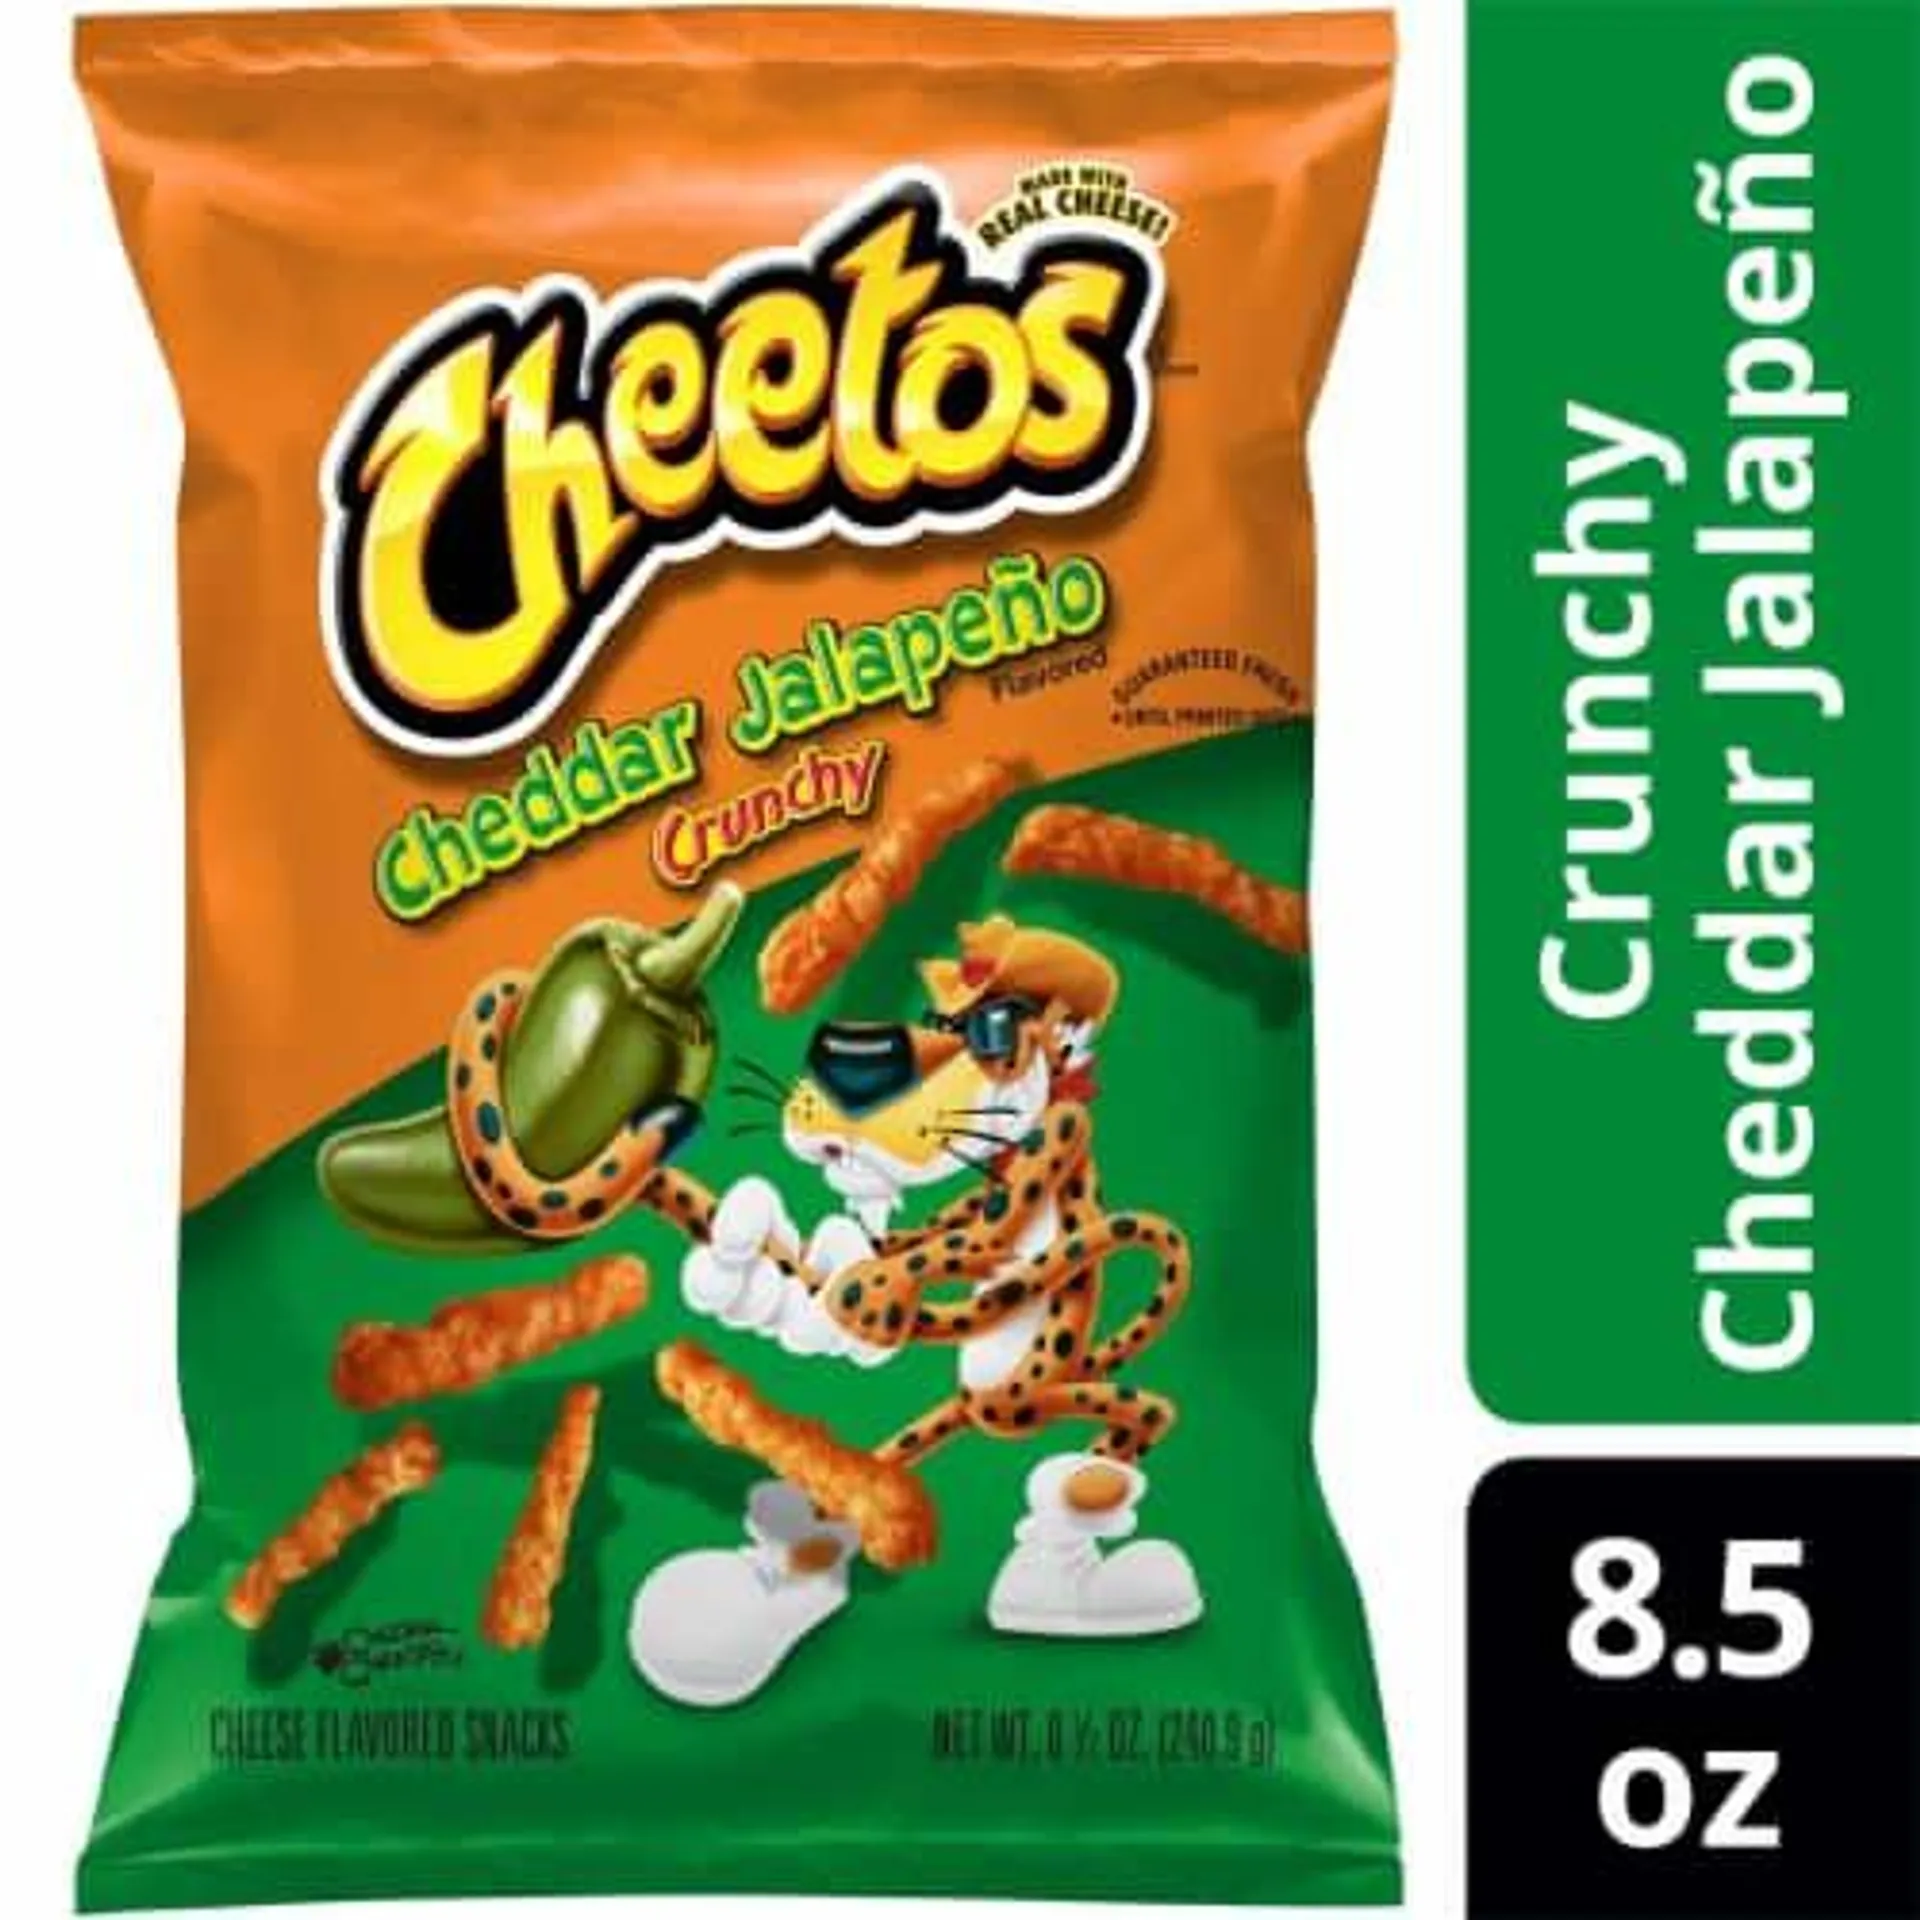 Cheetos® Crunchy Cheddar Jalapeno Chips